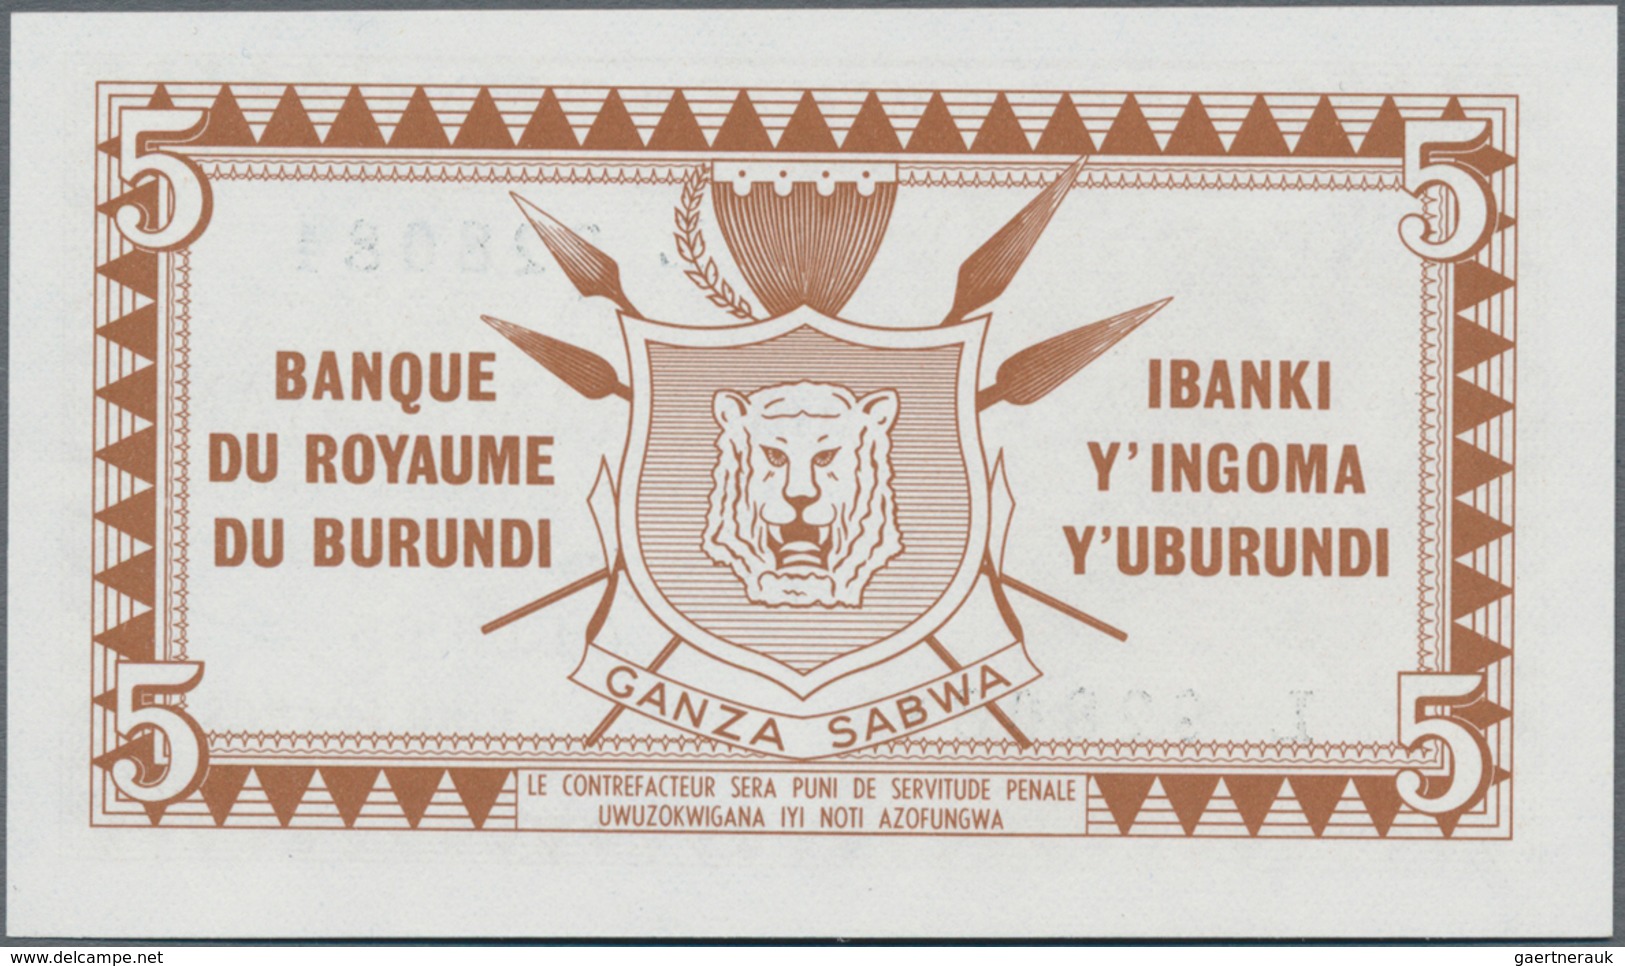 Burundi: Banque Du Royaume Du Burundi 5 Francs 1965, P.8 In Perfect UNC Condition - Burundi